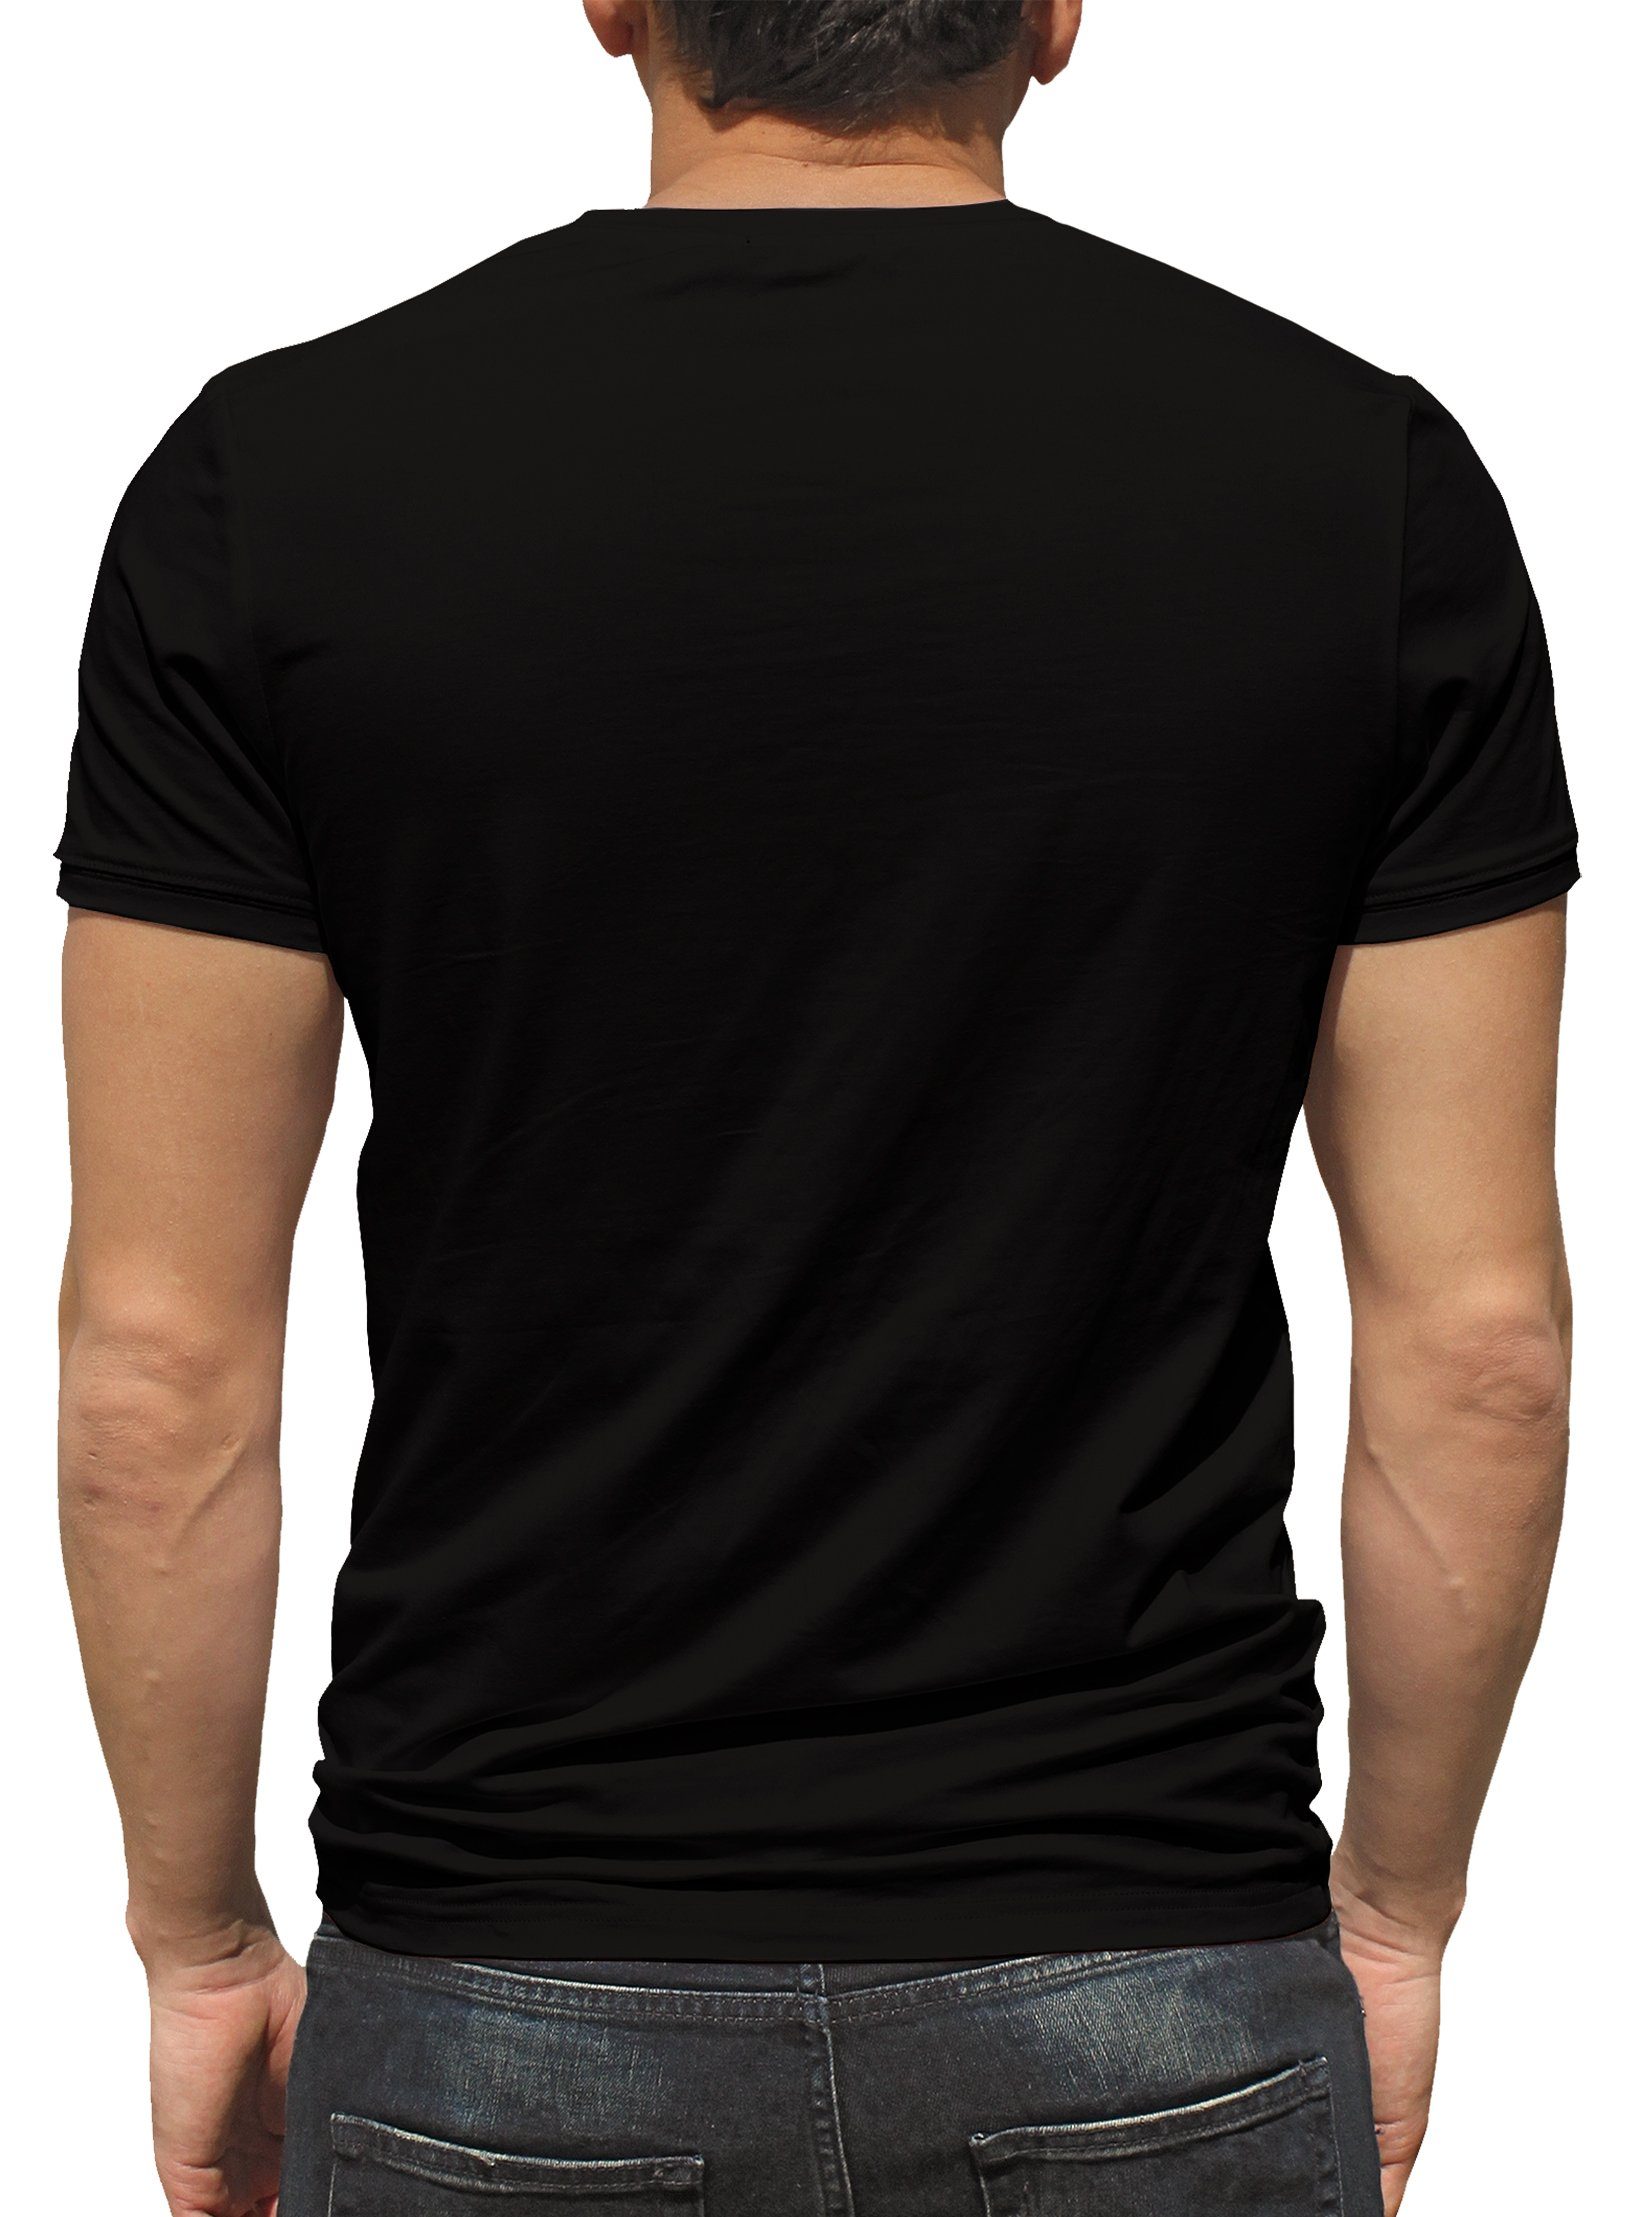 TShirt-People Print-Shirt Grinched Pac T-Shirt Herren